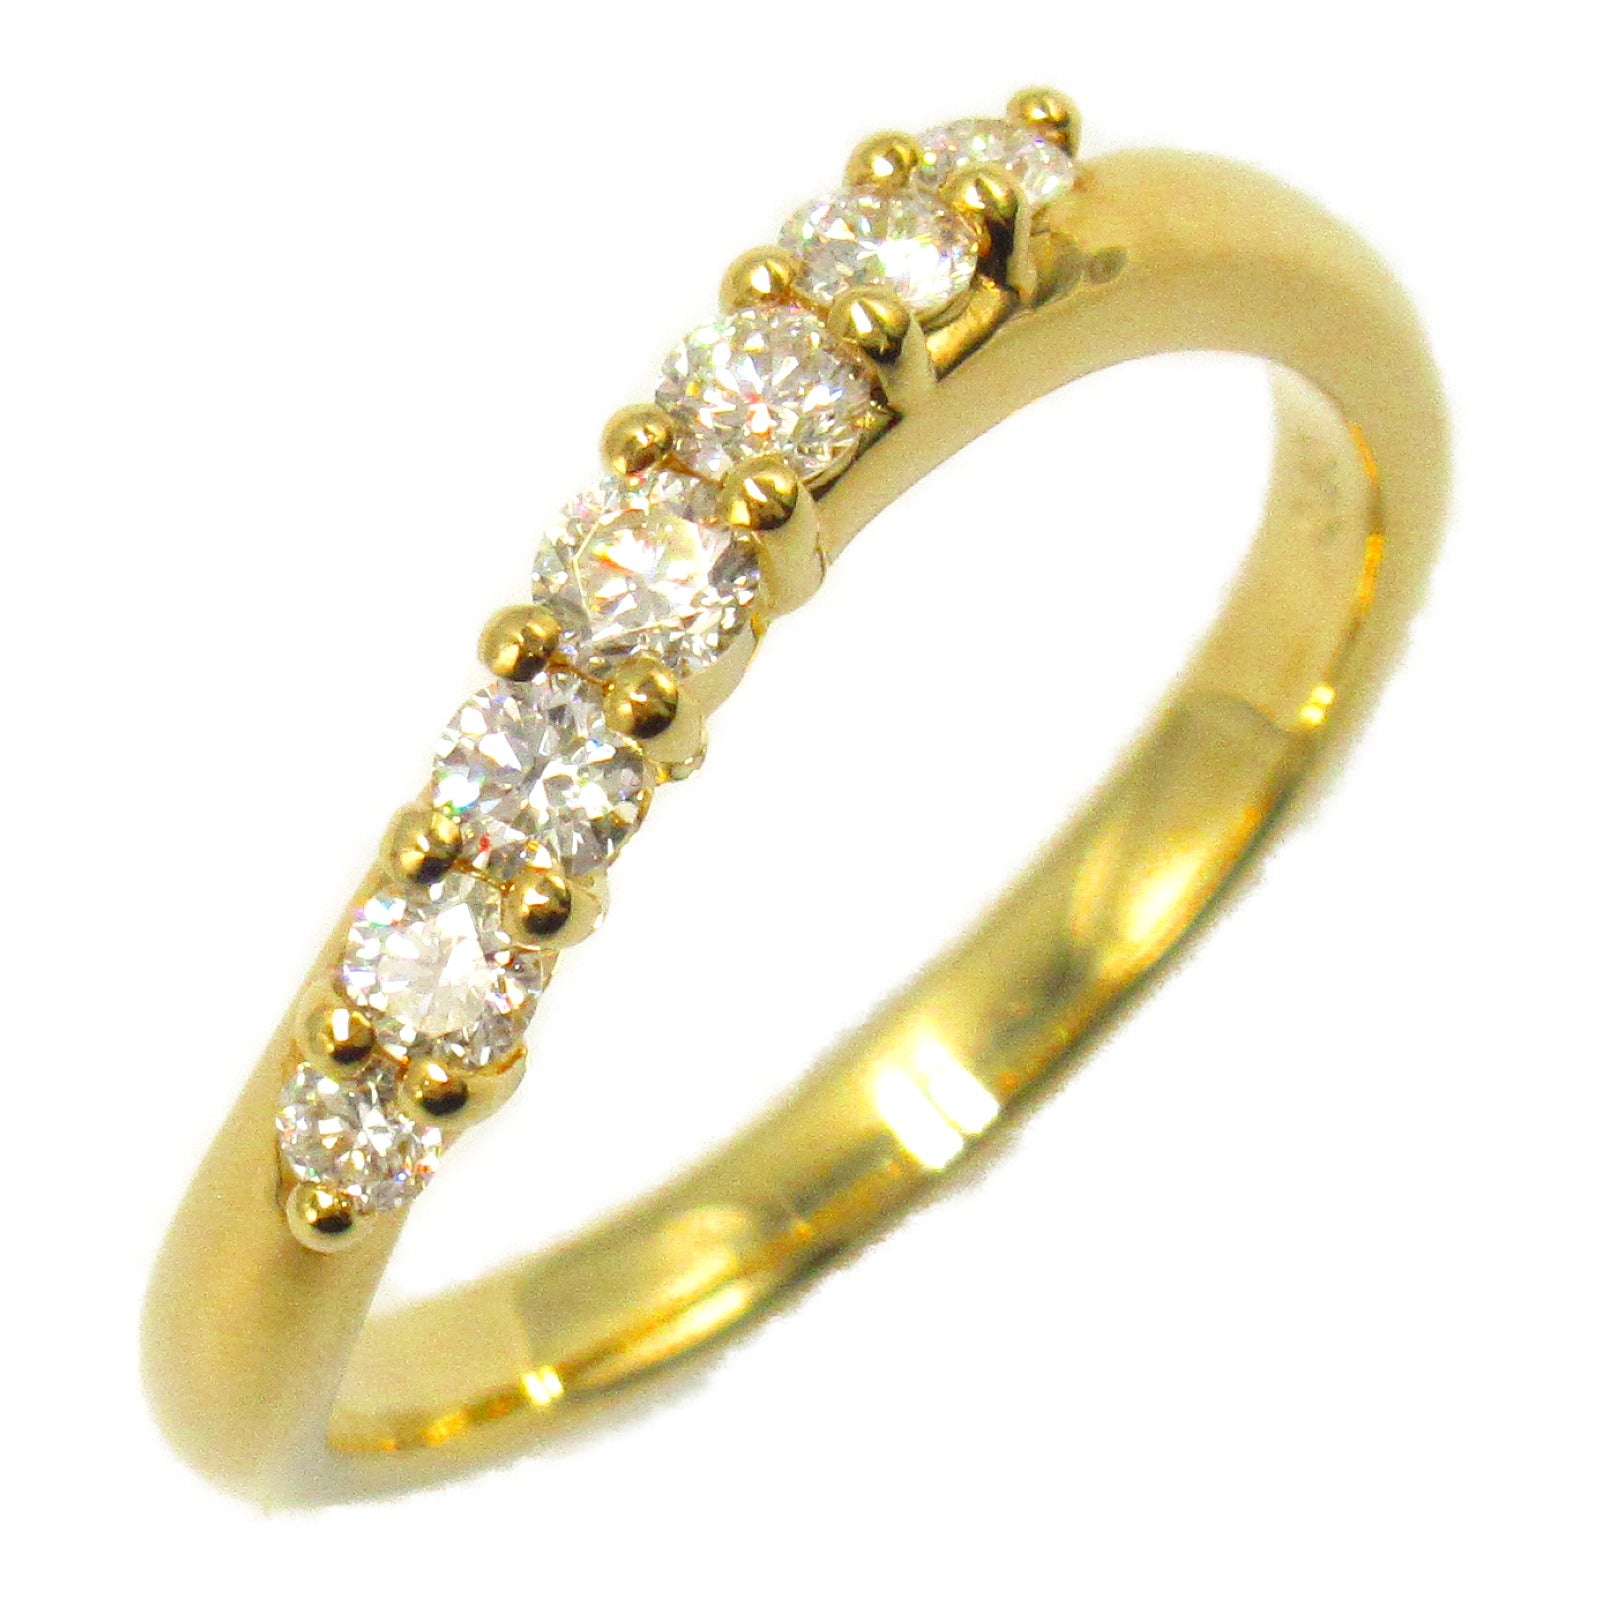 Jewelry Jewelry Diamond Ring Ring Ring Jewelry K18 (yellow g) Diamond  Clear Diamond 2.7g